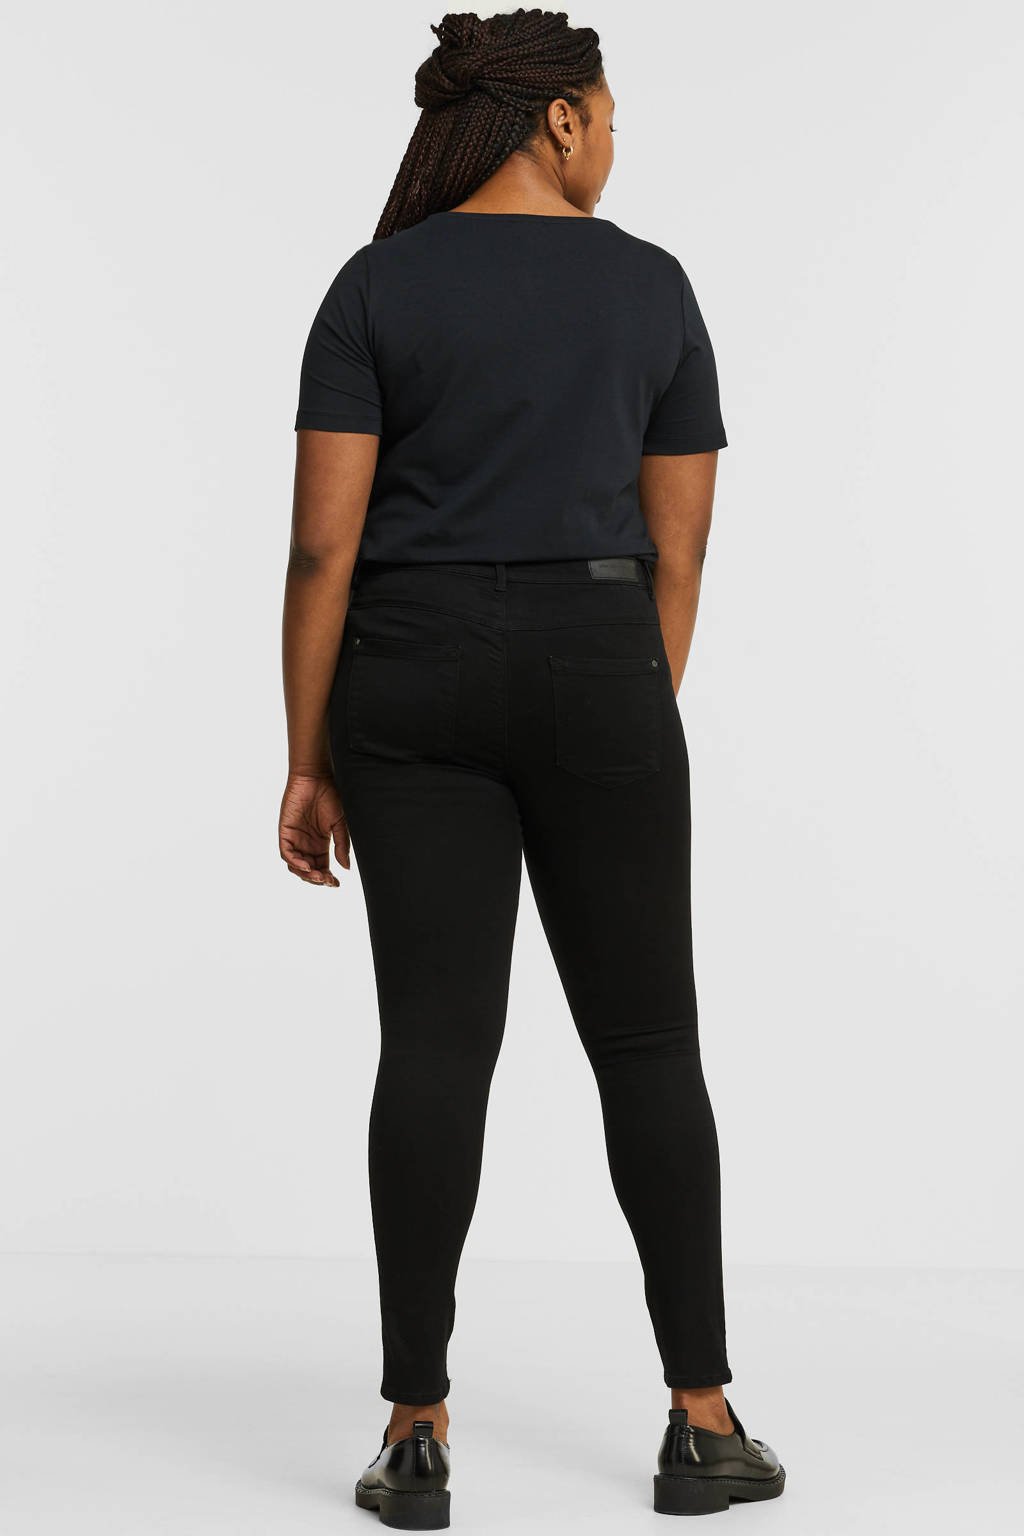 ONLY CARMAKOMA high zwart waist jeans wehkamp | CARAUGUSTA skinny